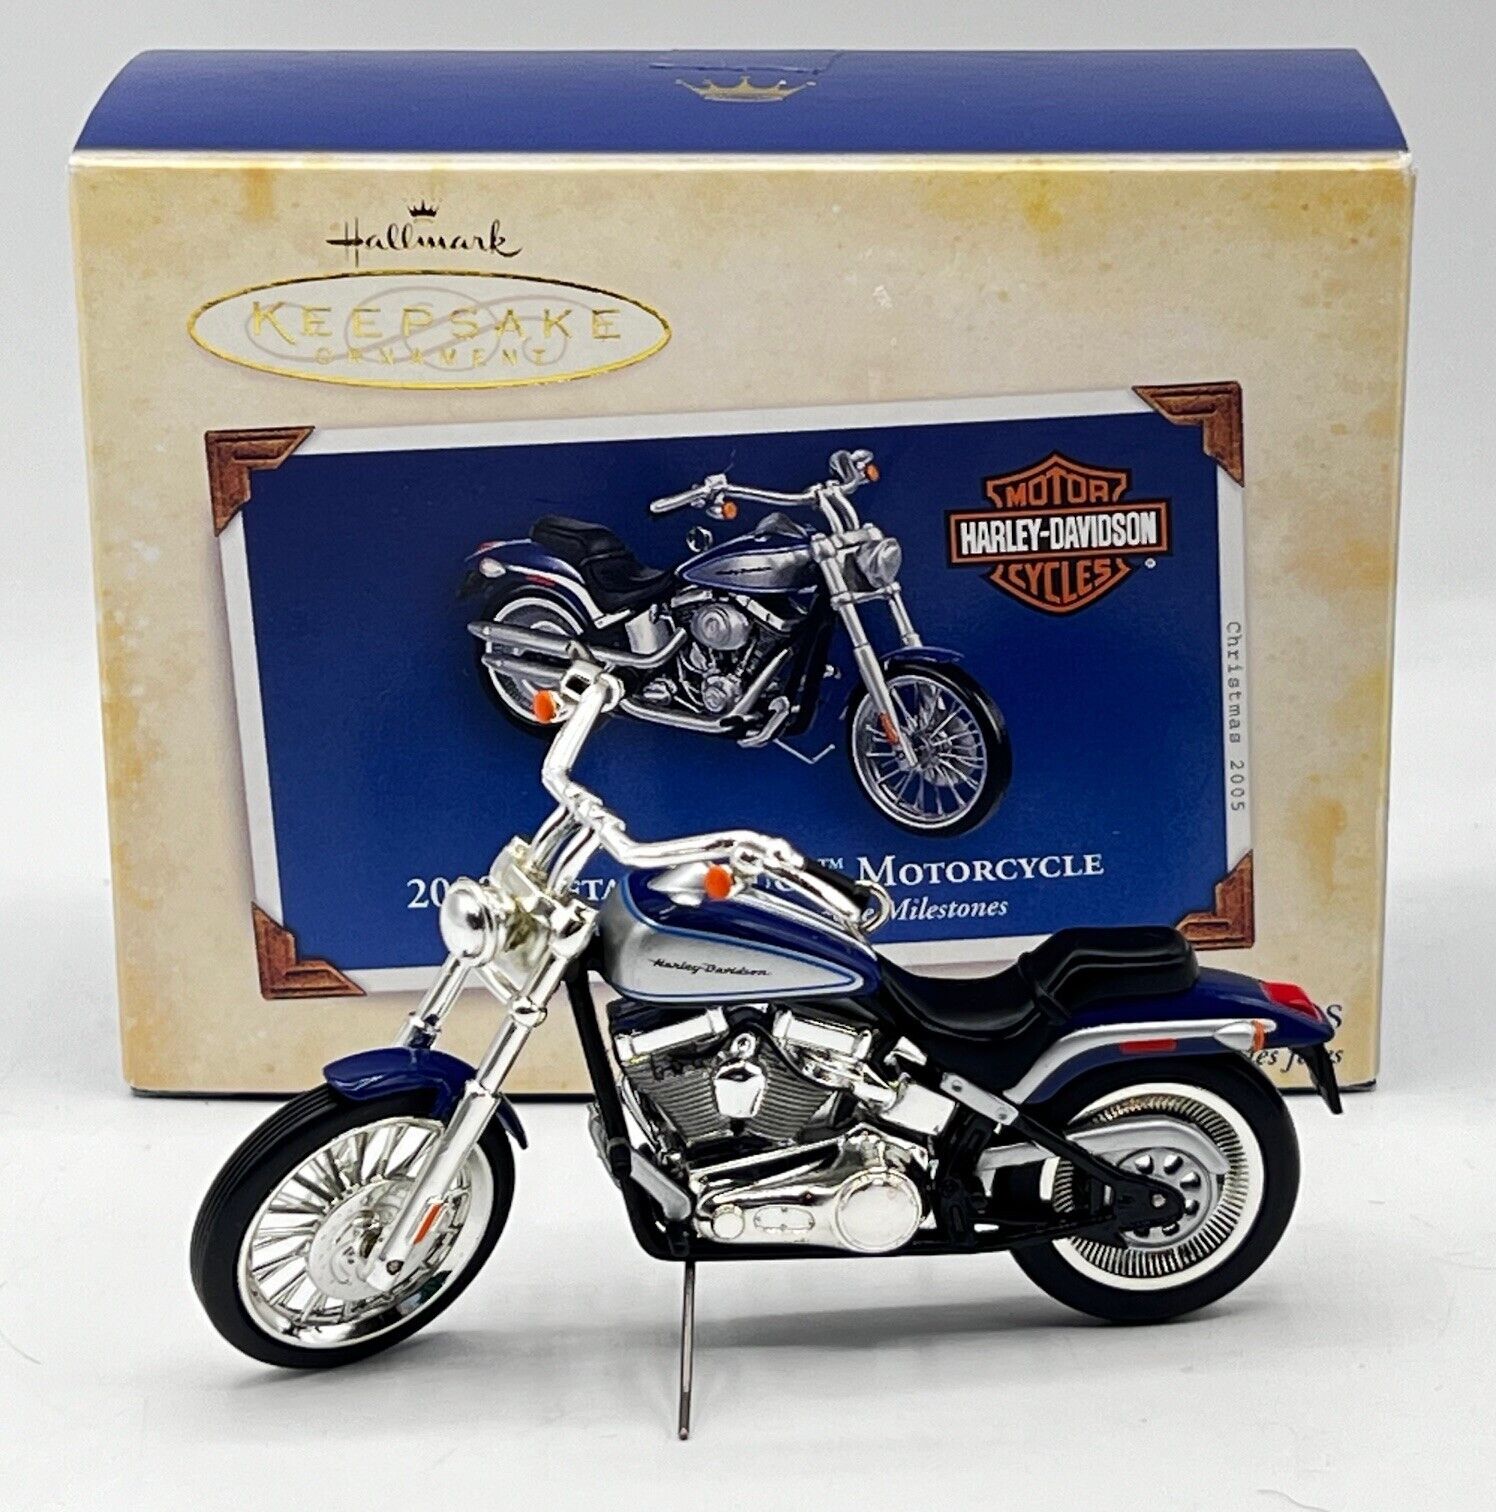 HALLMARK Keepsake Ornament - 2000 Softail Deuce Harley Davidson Motorcycle